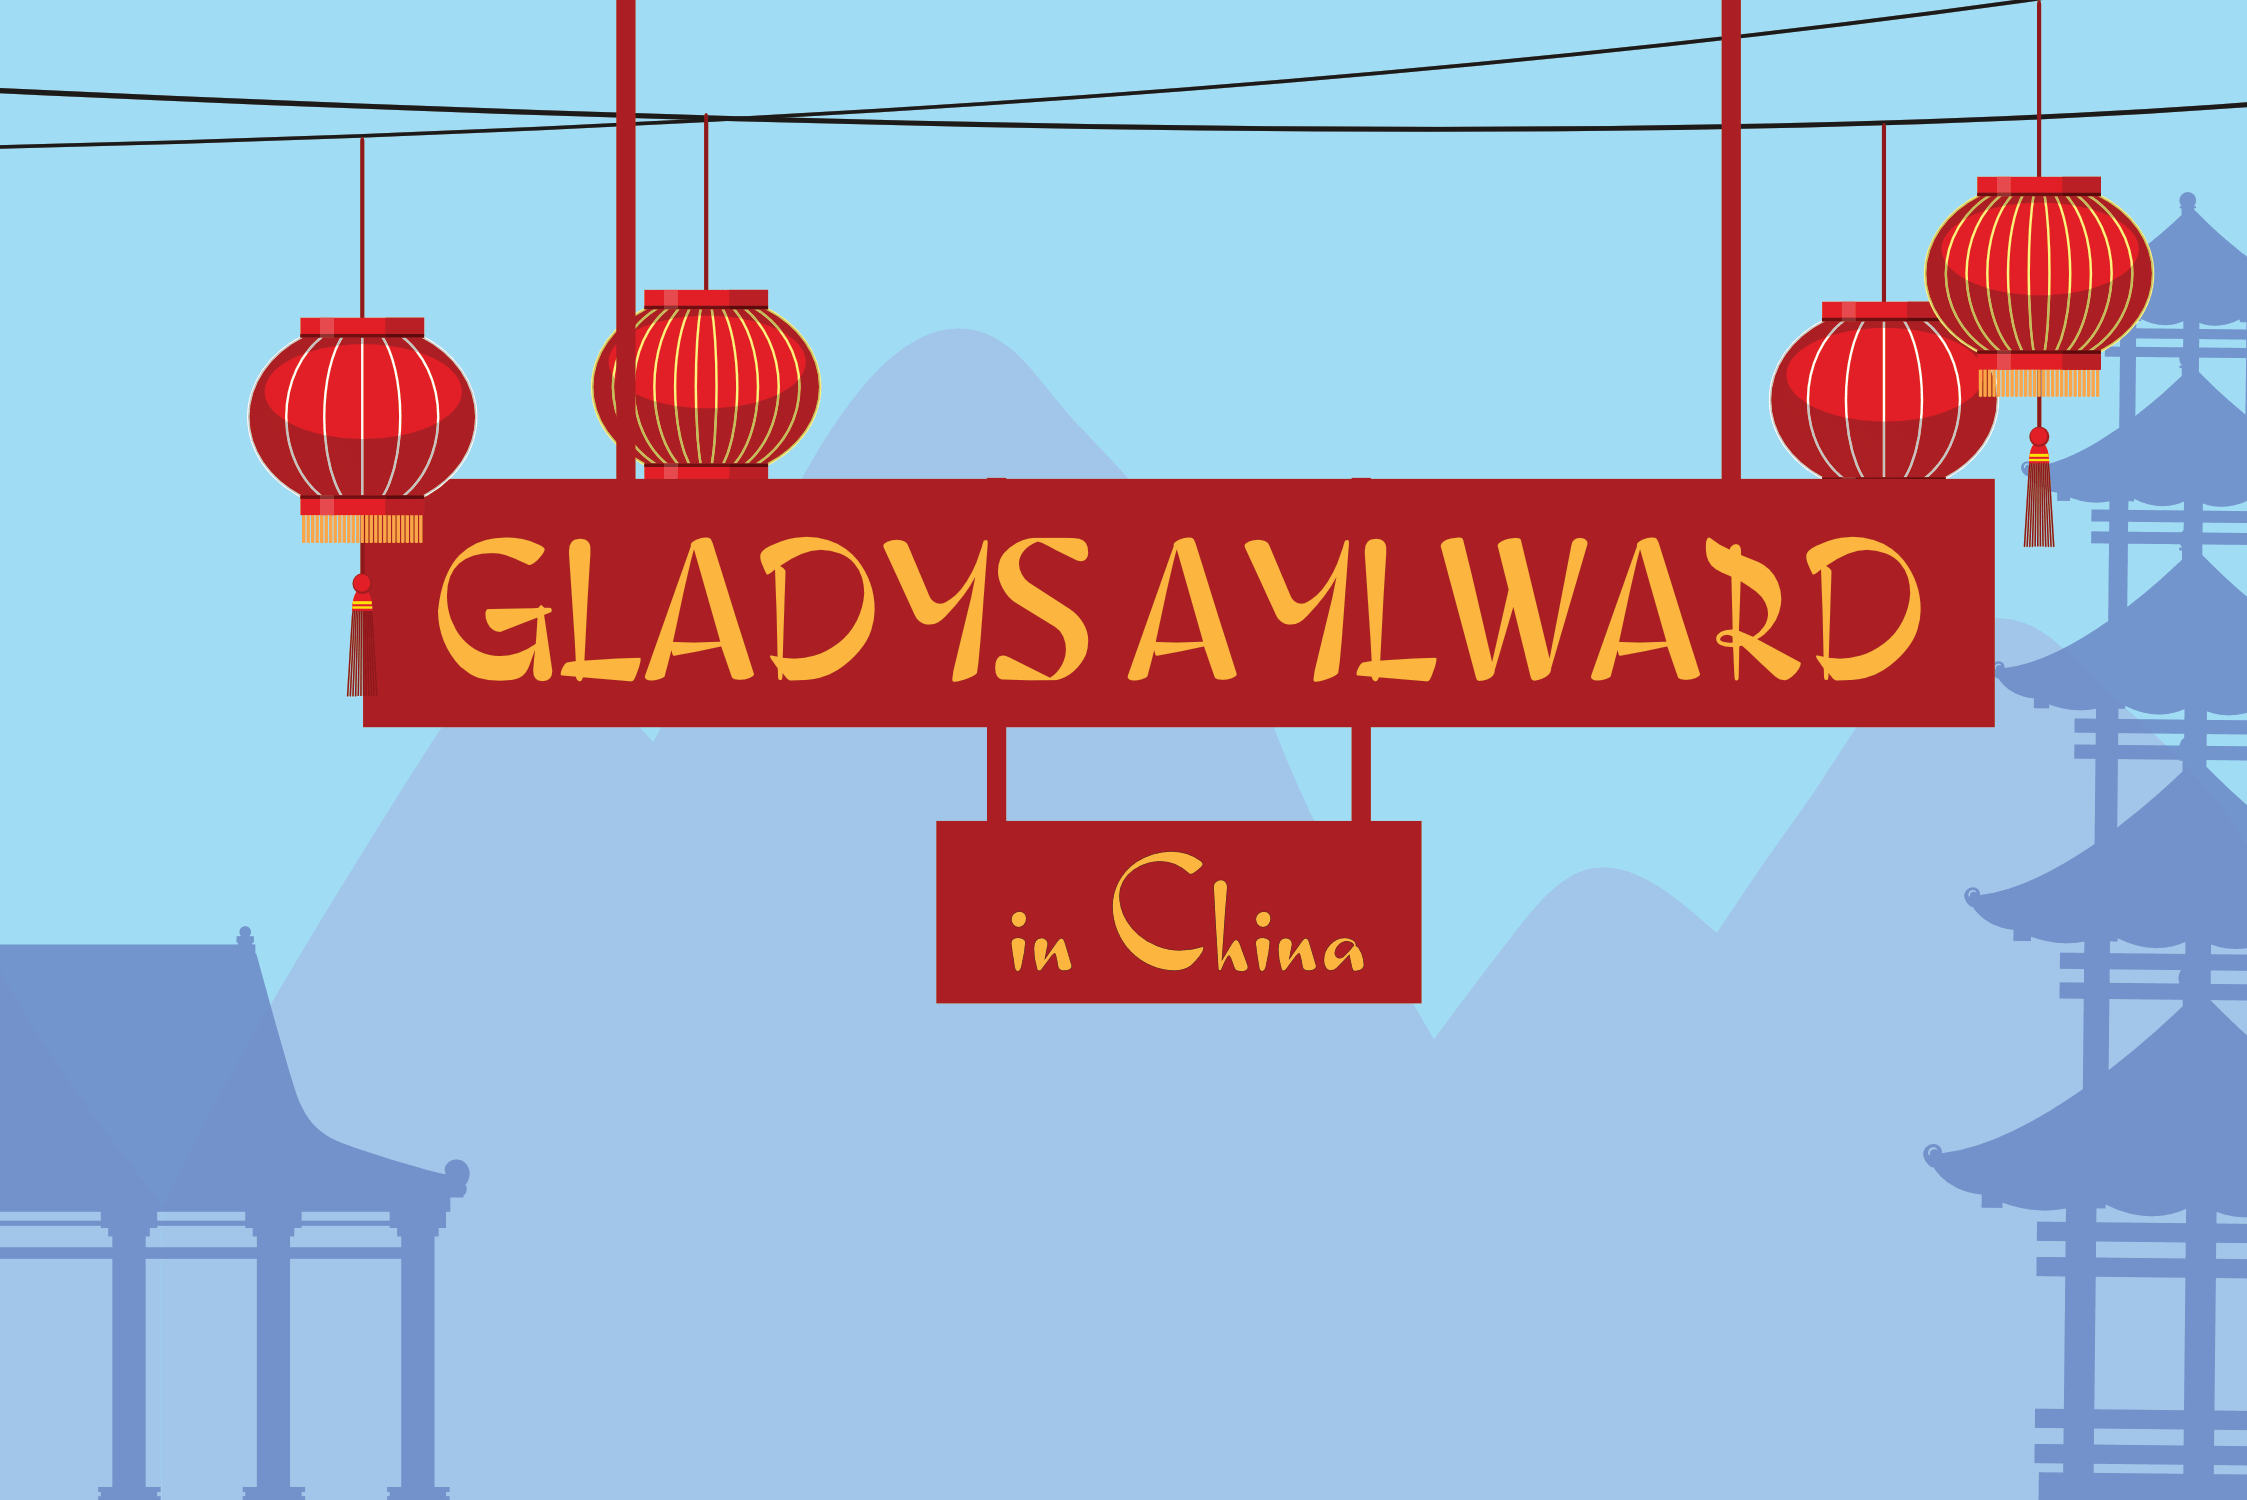 Gladys Aylward in China